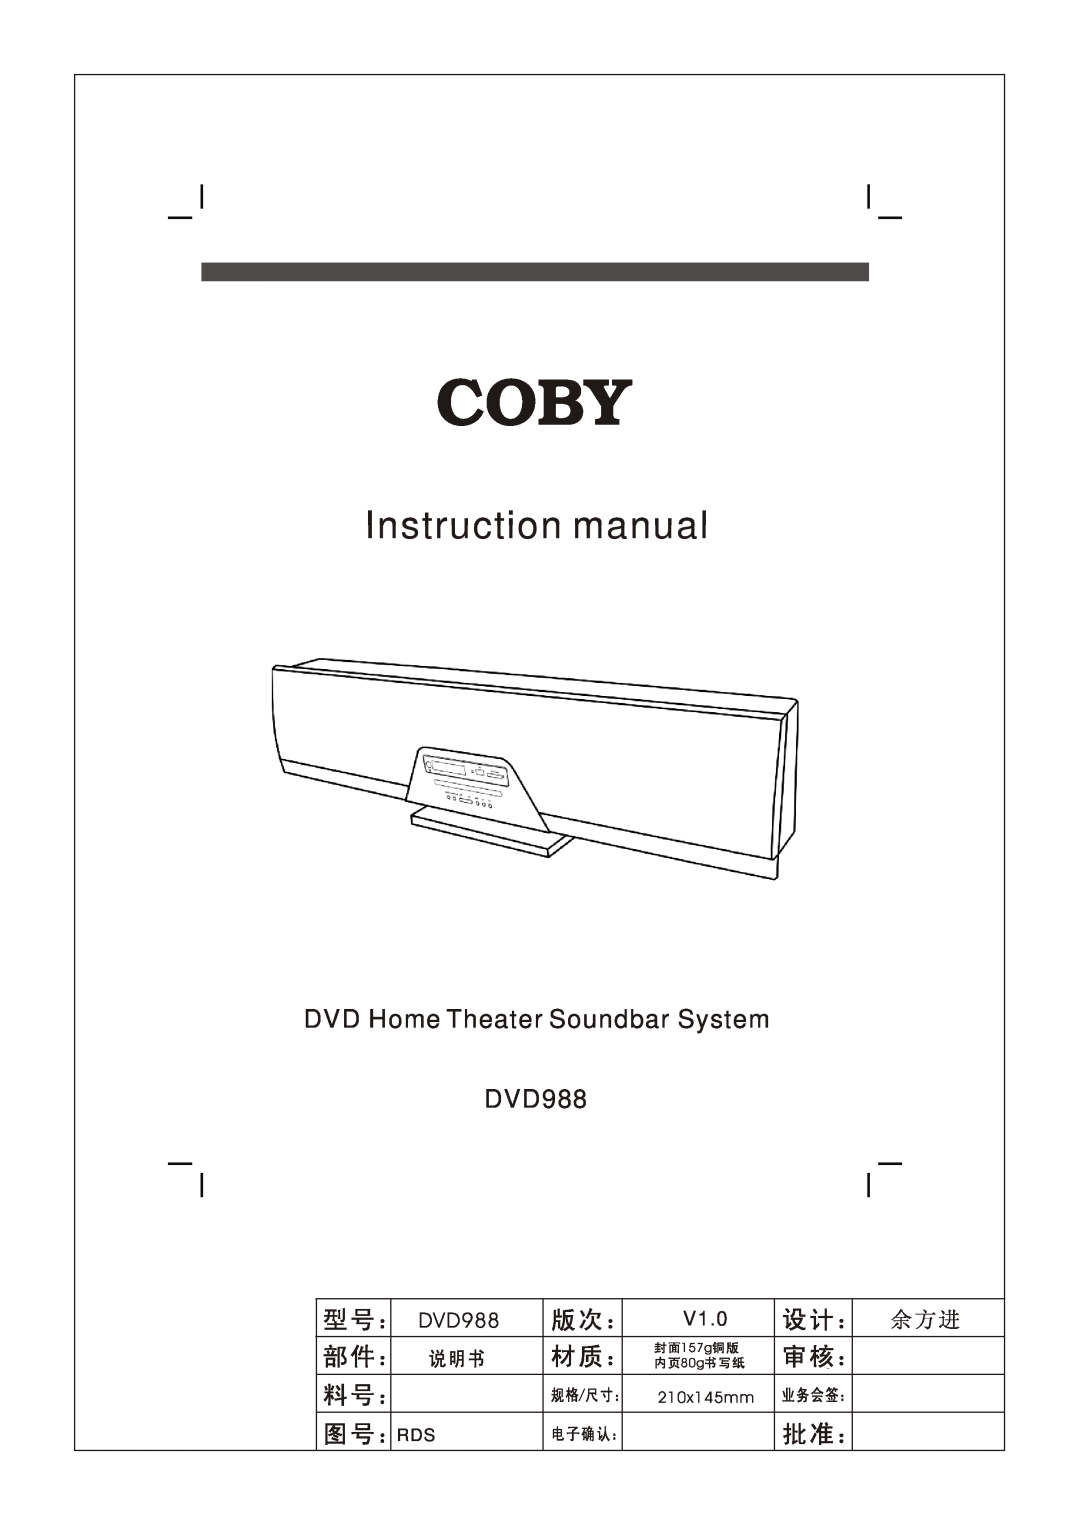 COBY electronic DVD988 instruction manual 210x145mm, DVD Home Theater Soundbar System, V1.0, 157g 